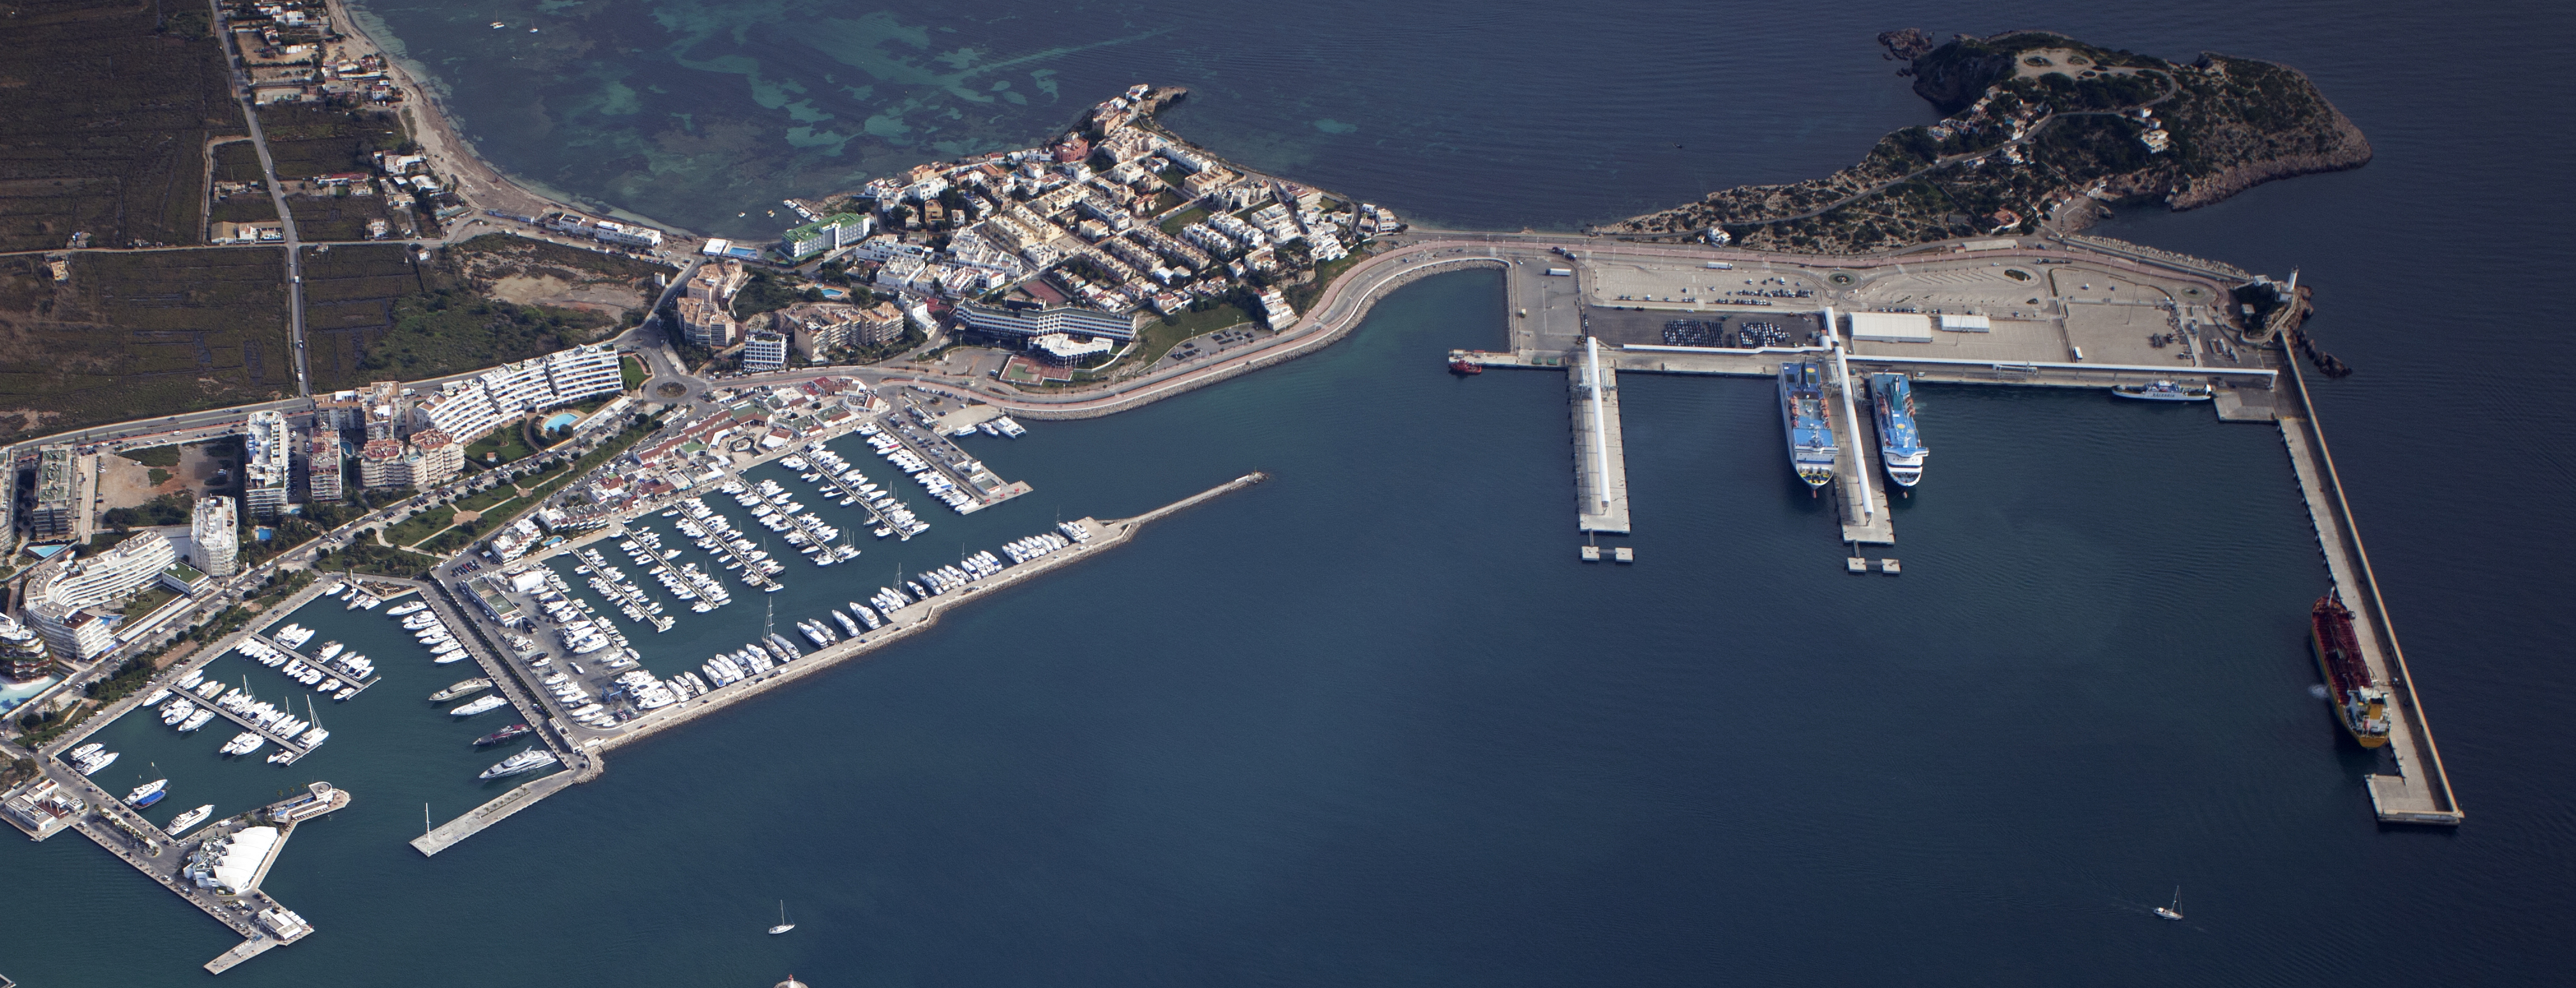 The APB to award concession to Ocibar to manage the moorings in Botafoc marina at the Port of Ibiza